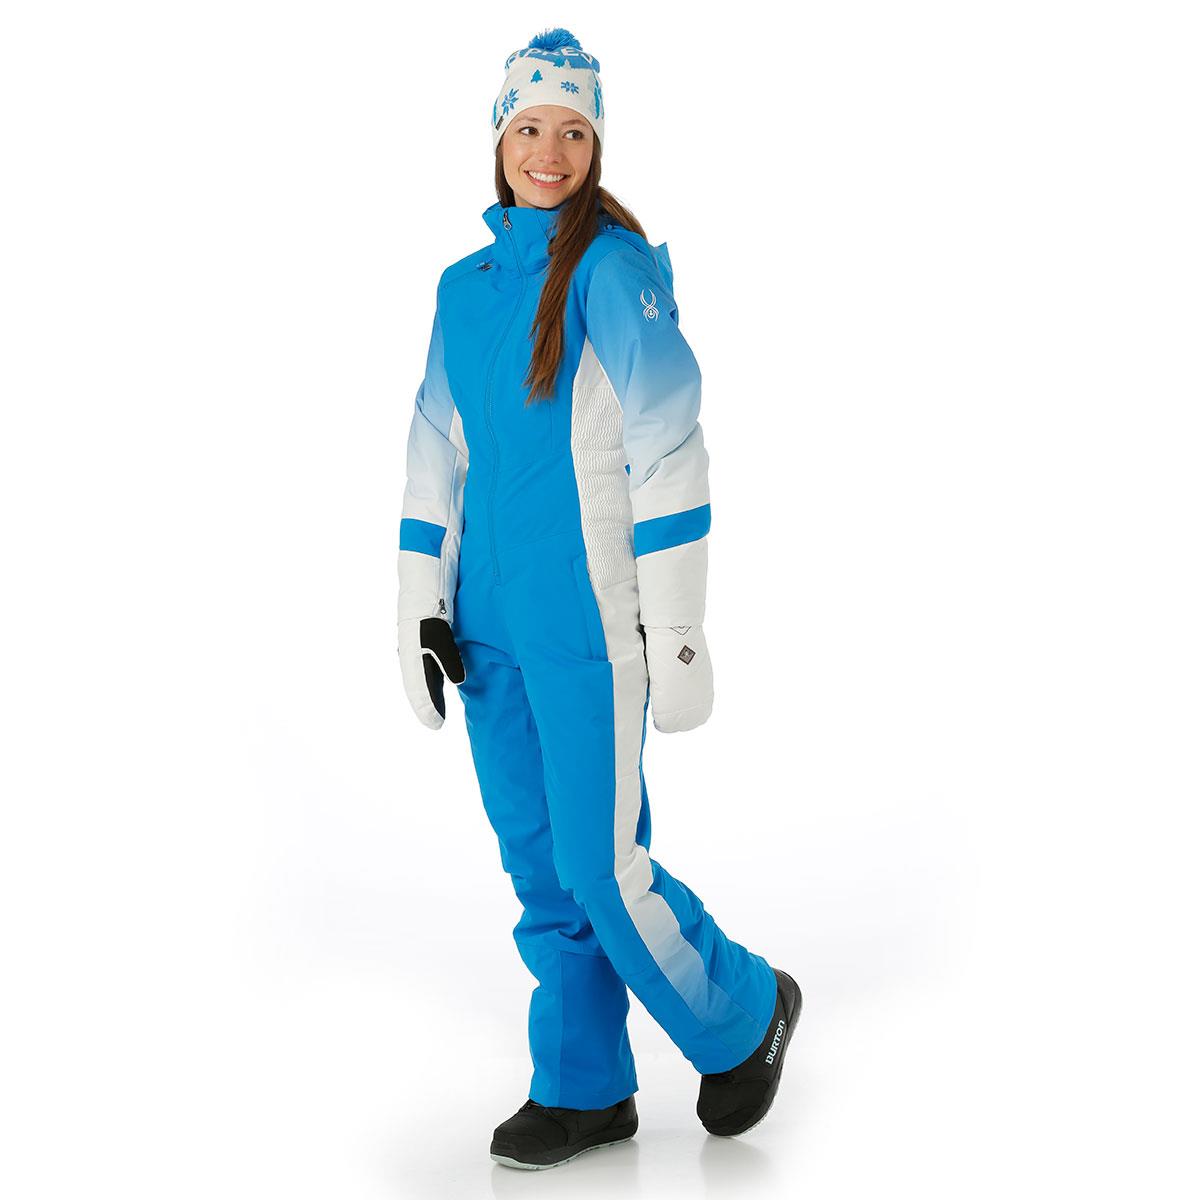 Echo Insulated Ski Pant - Defrost Collegiate (Blue) - Womens